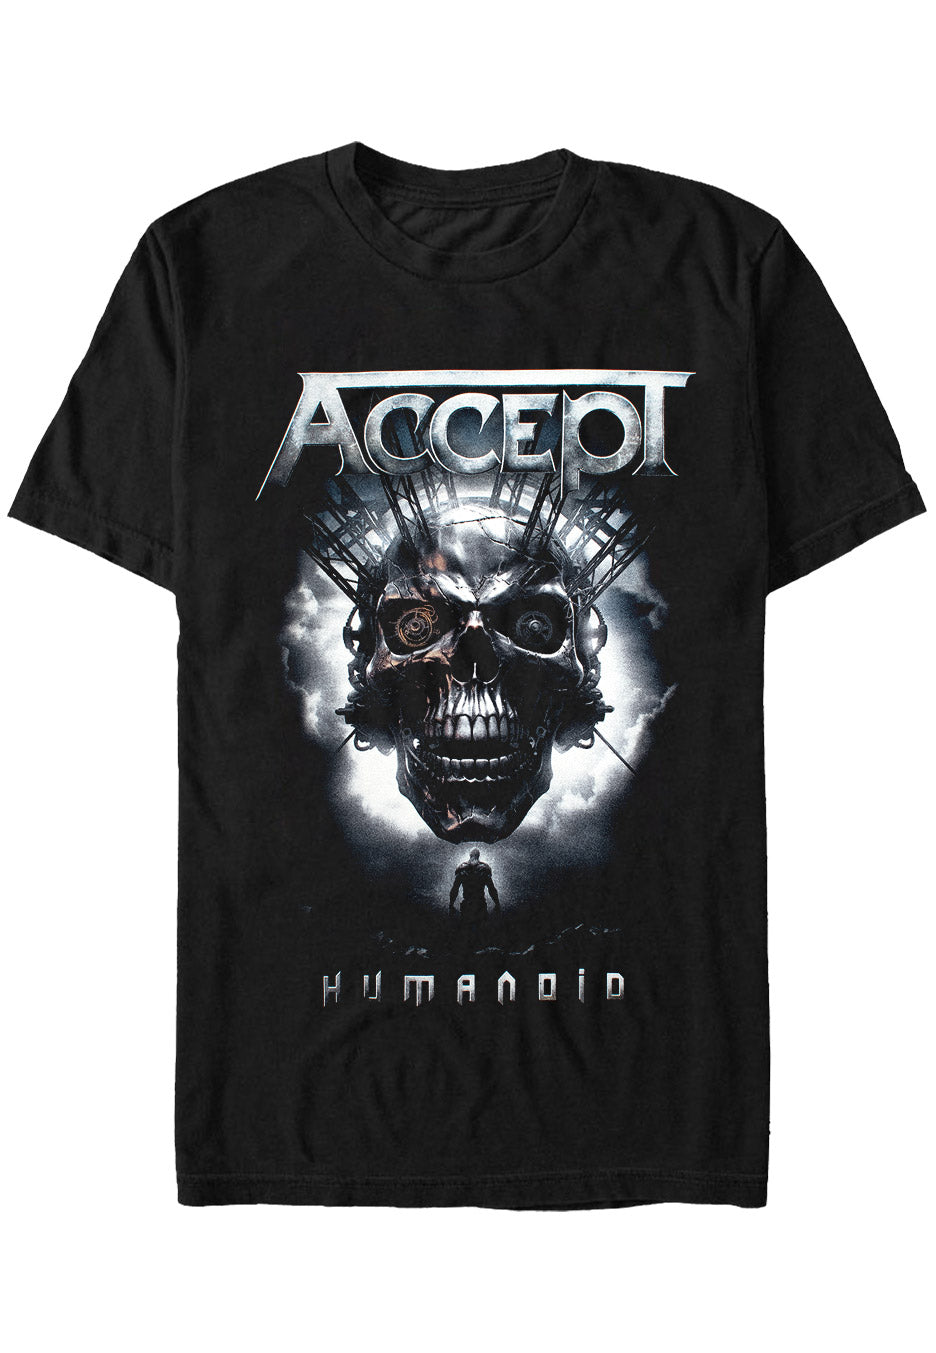 Accept - Humanoid - T-Shirt